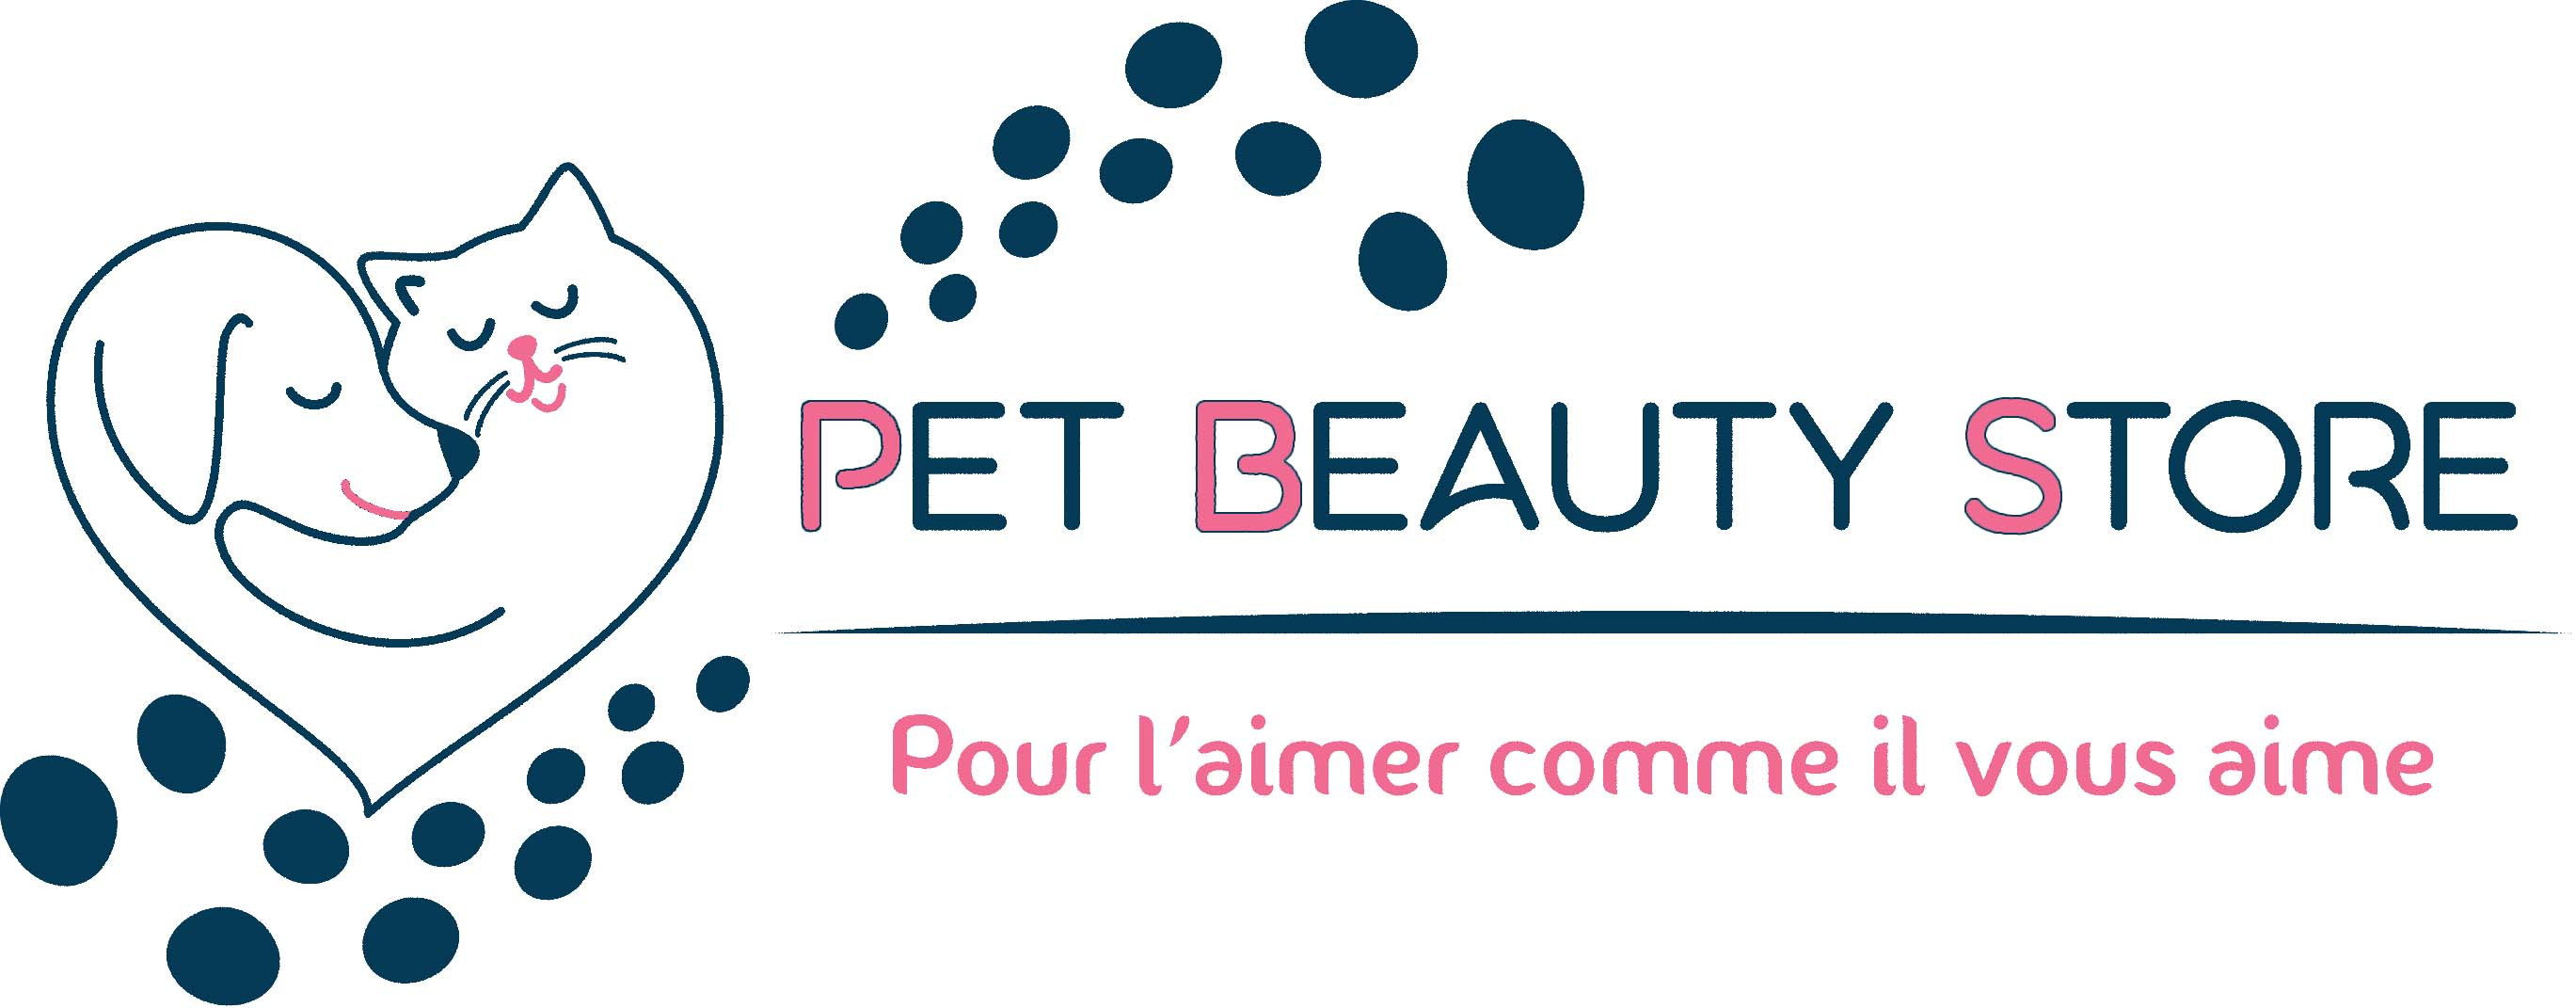 Pet Beauty Store